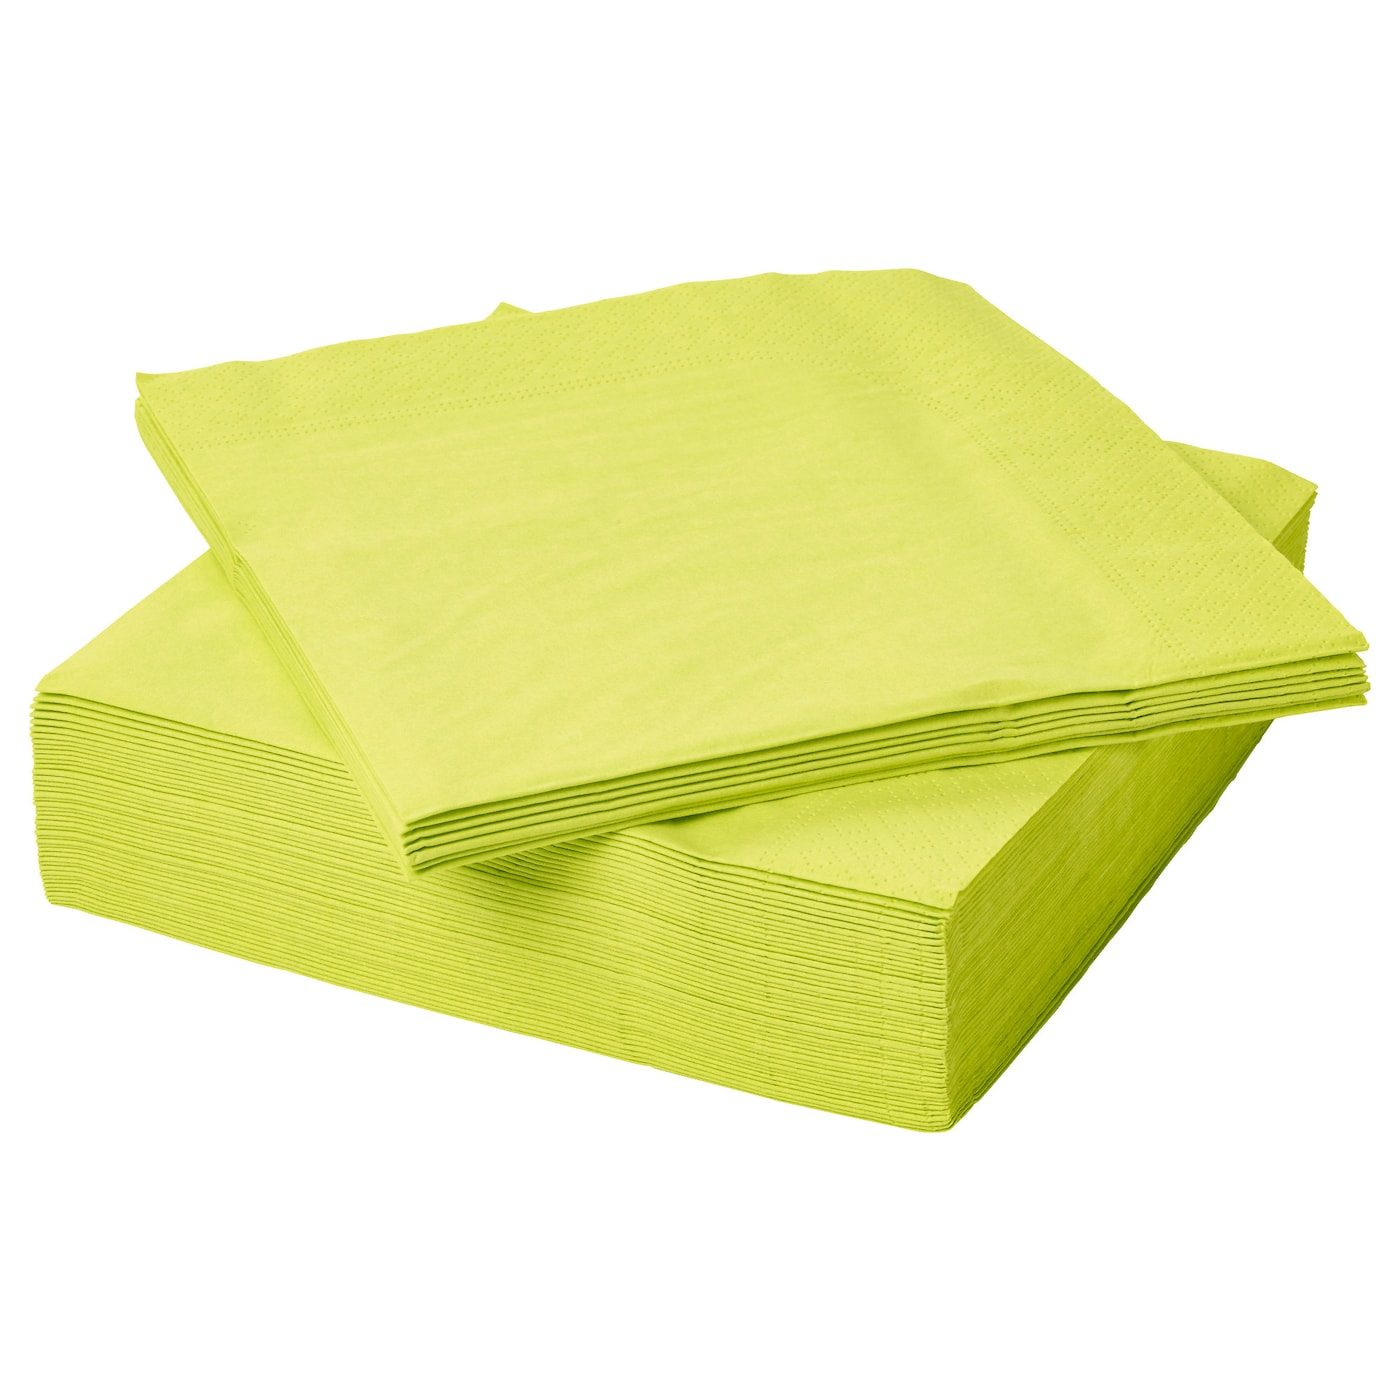 FANTASTISK Paper napkin, yellow - IKEA